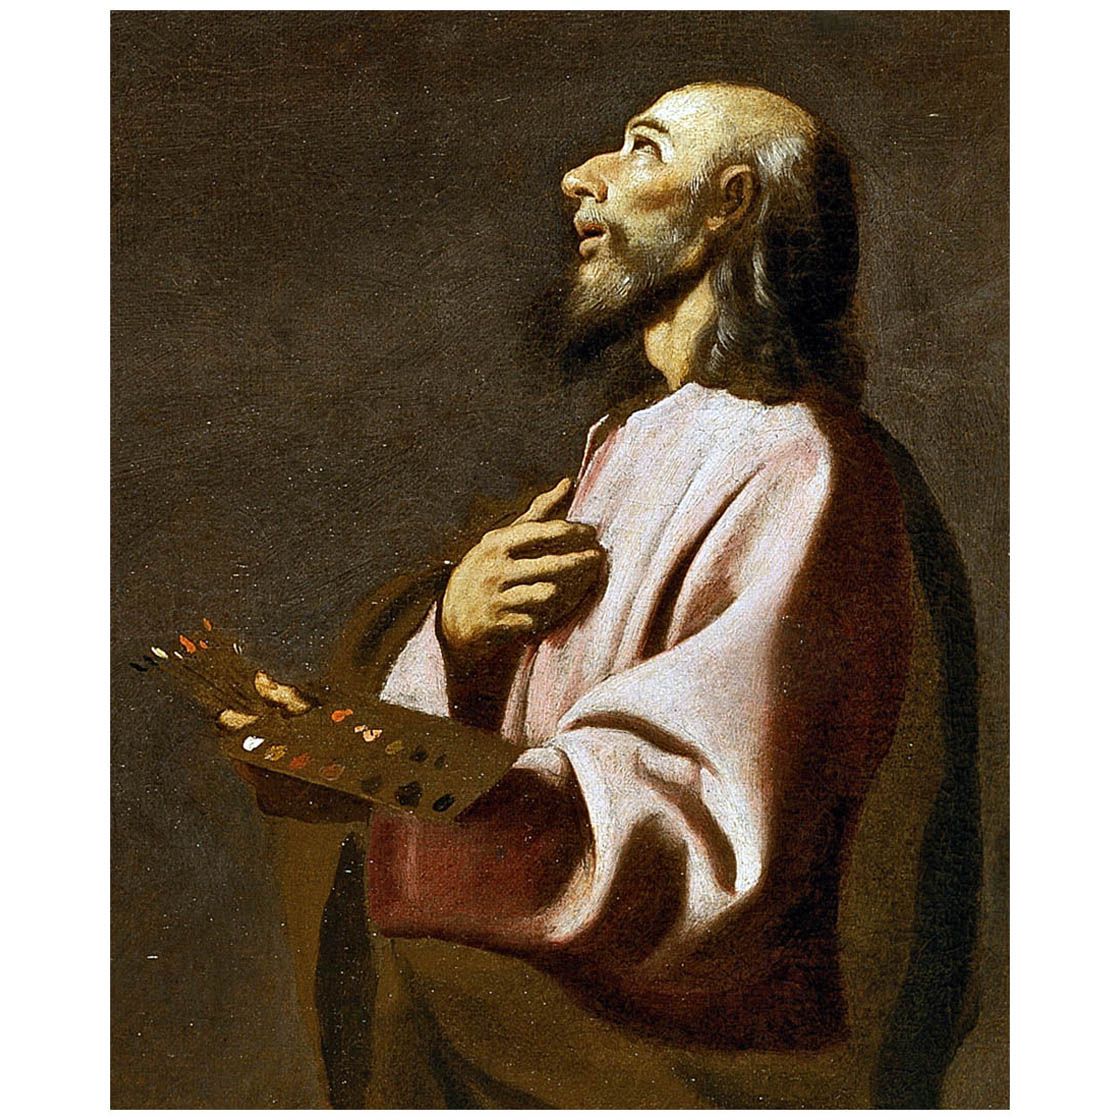 Probable autorretrato. (detalle de Cristo crucificado, con un pintor). 1635. Prado